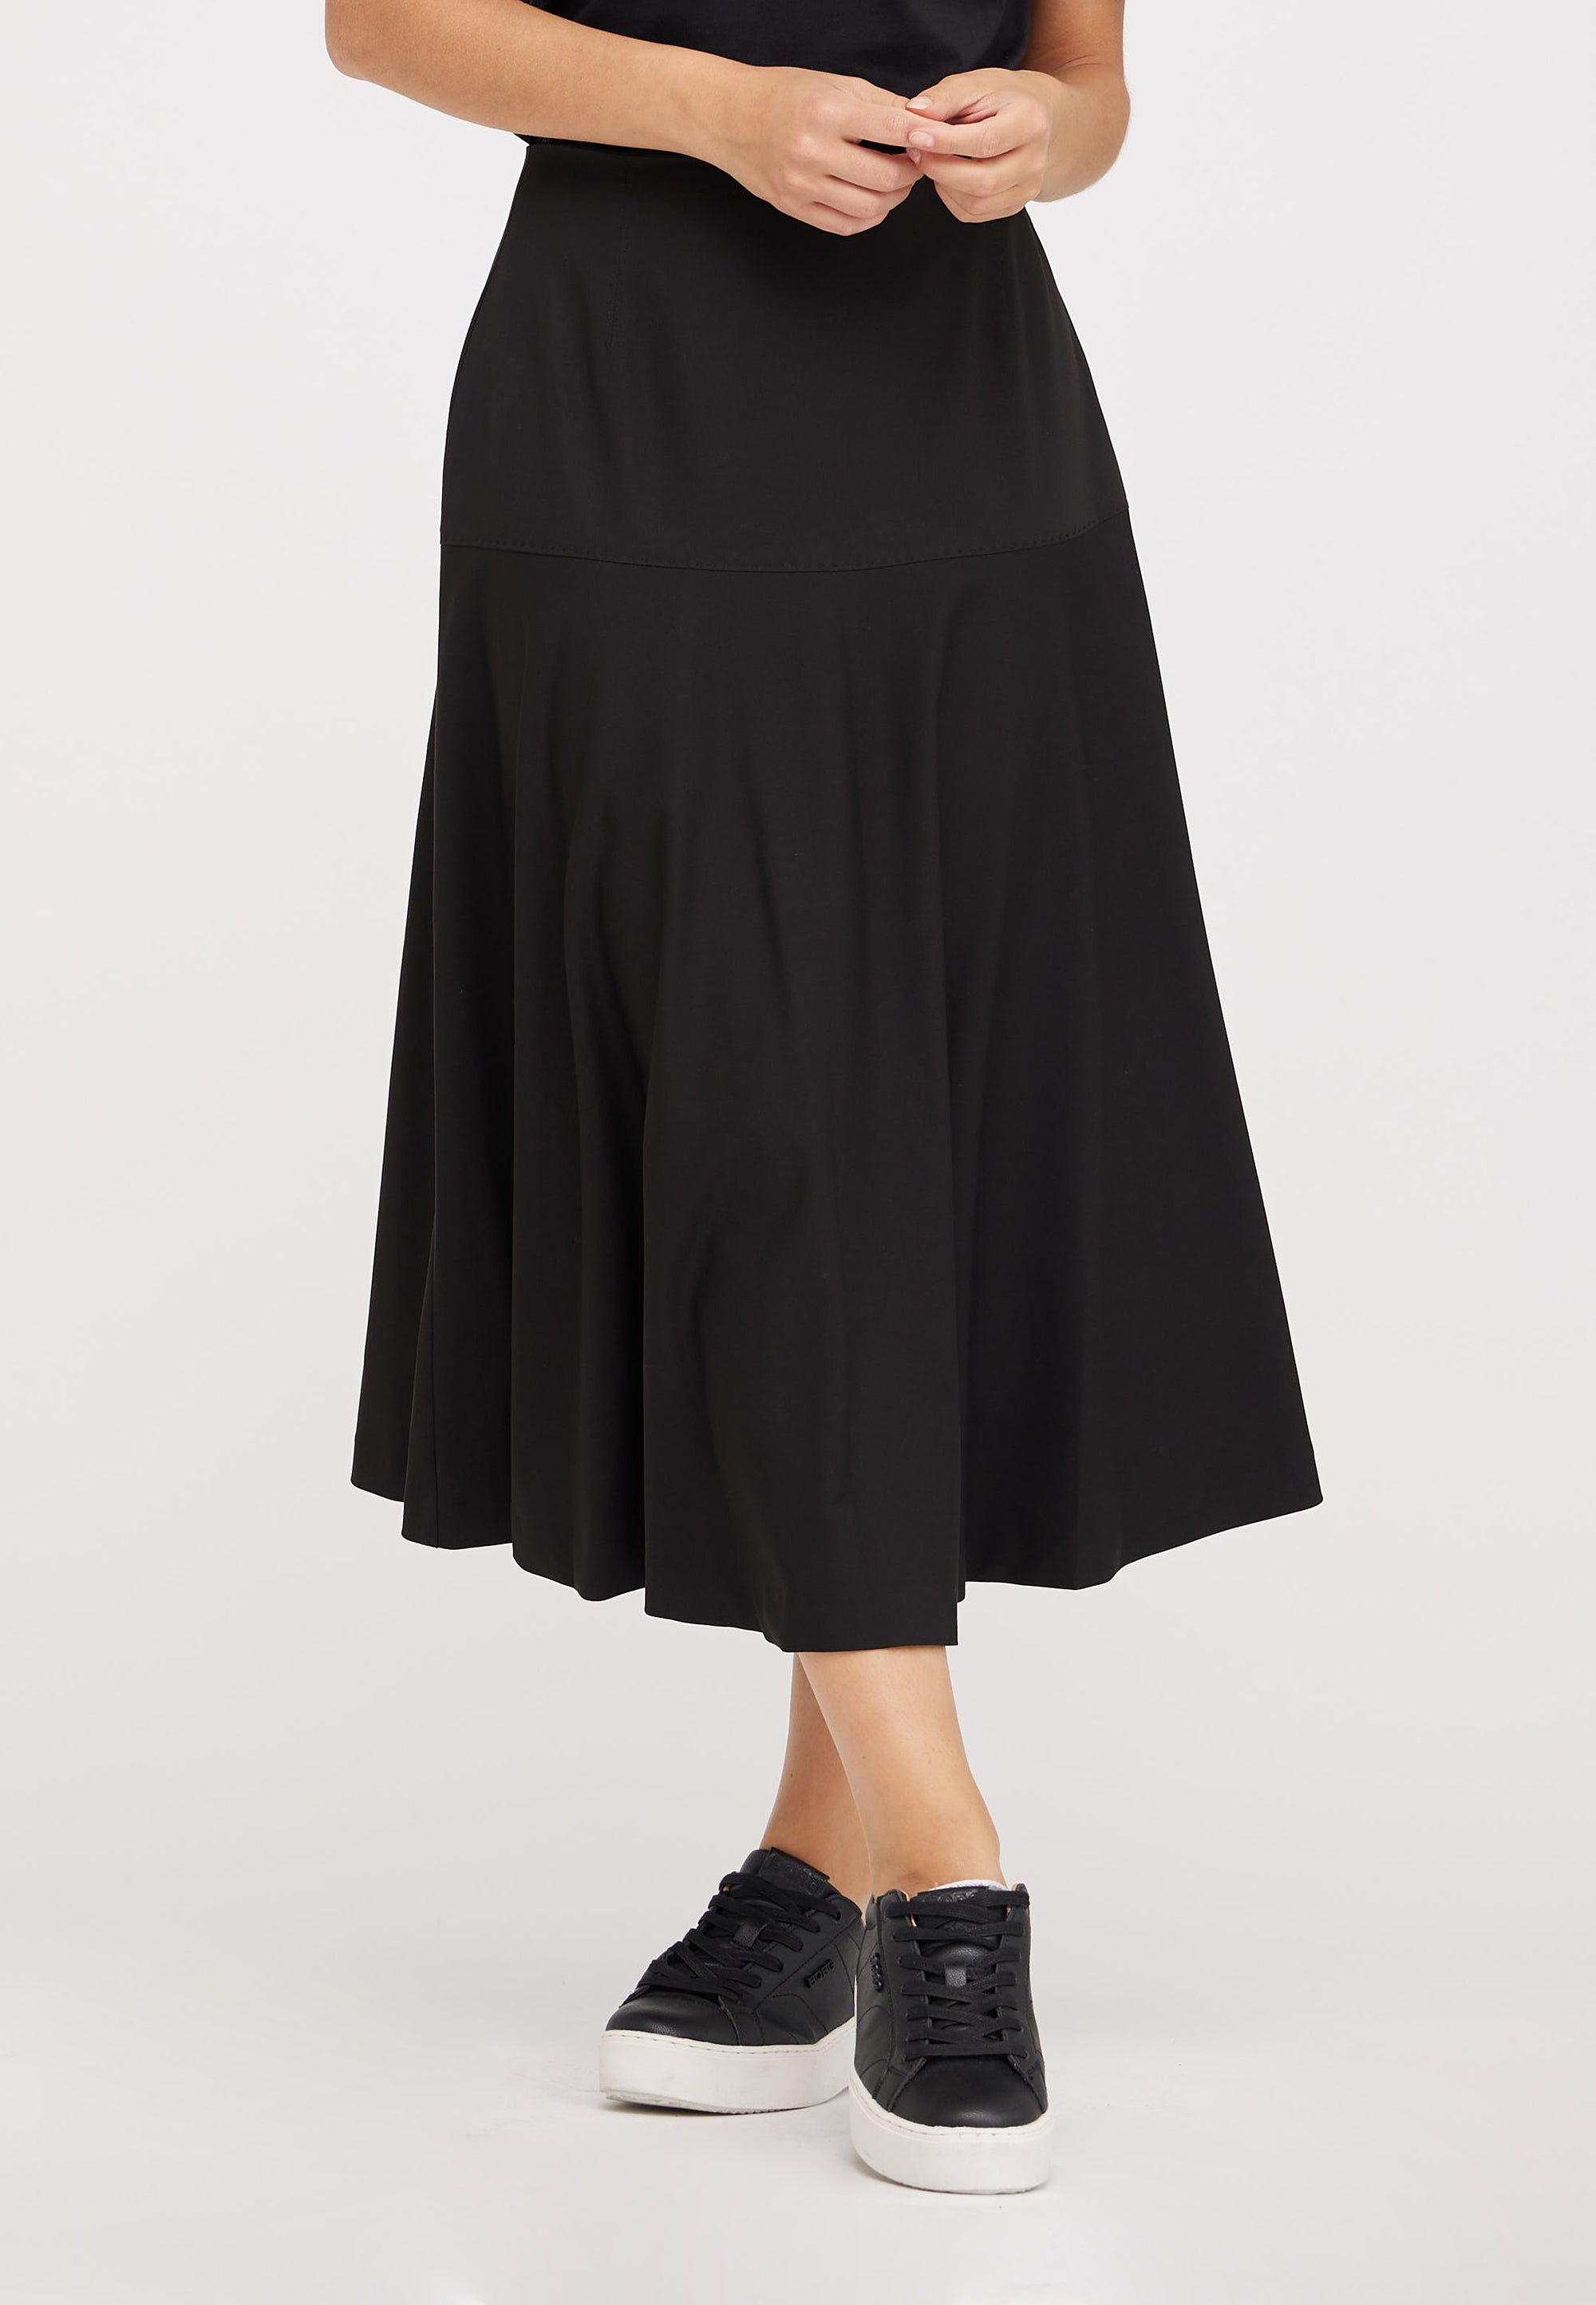 LAURIE Angel - 82 cm. Skirts 99000 Black